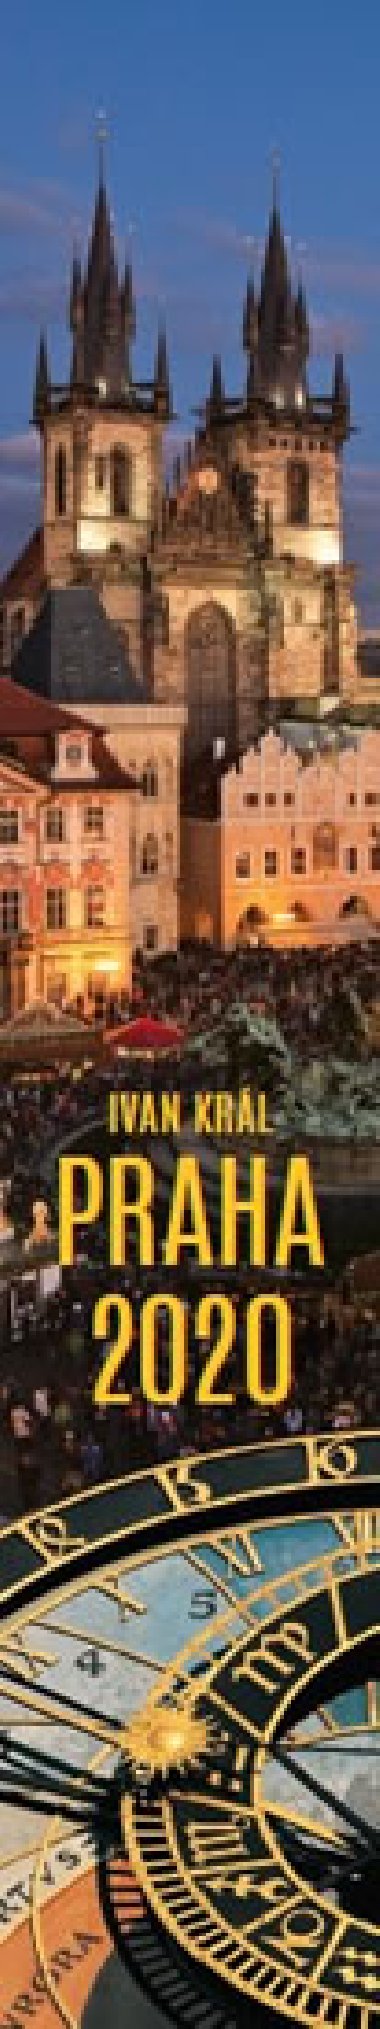 Kalend 2020 - Praha vzanka - Ivan Krl